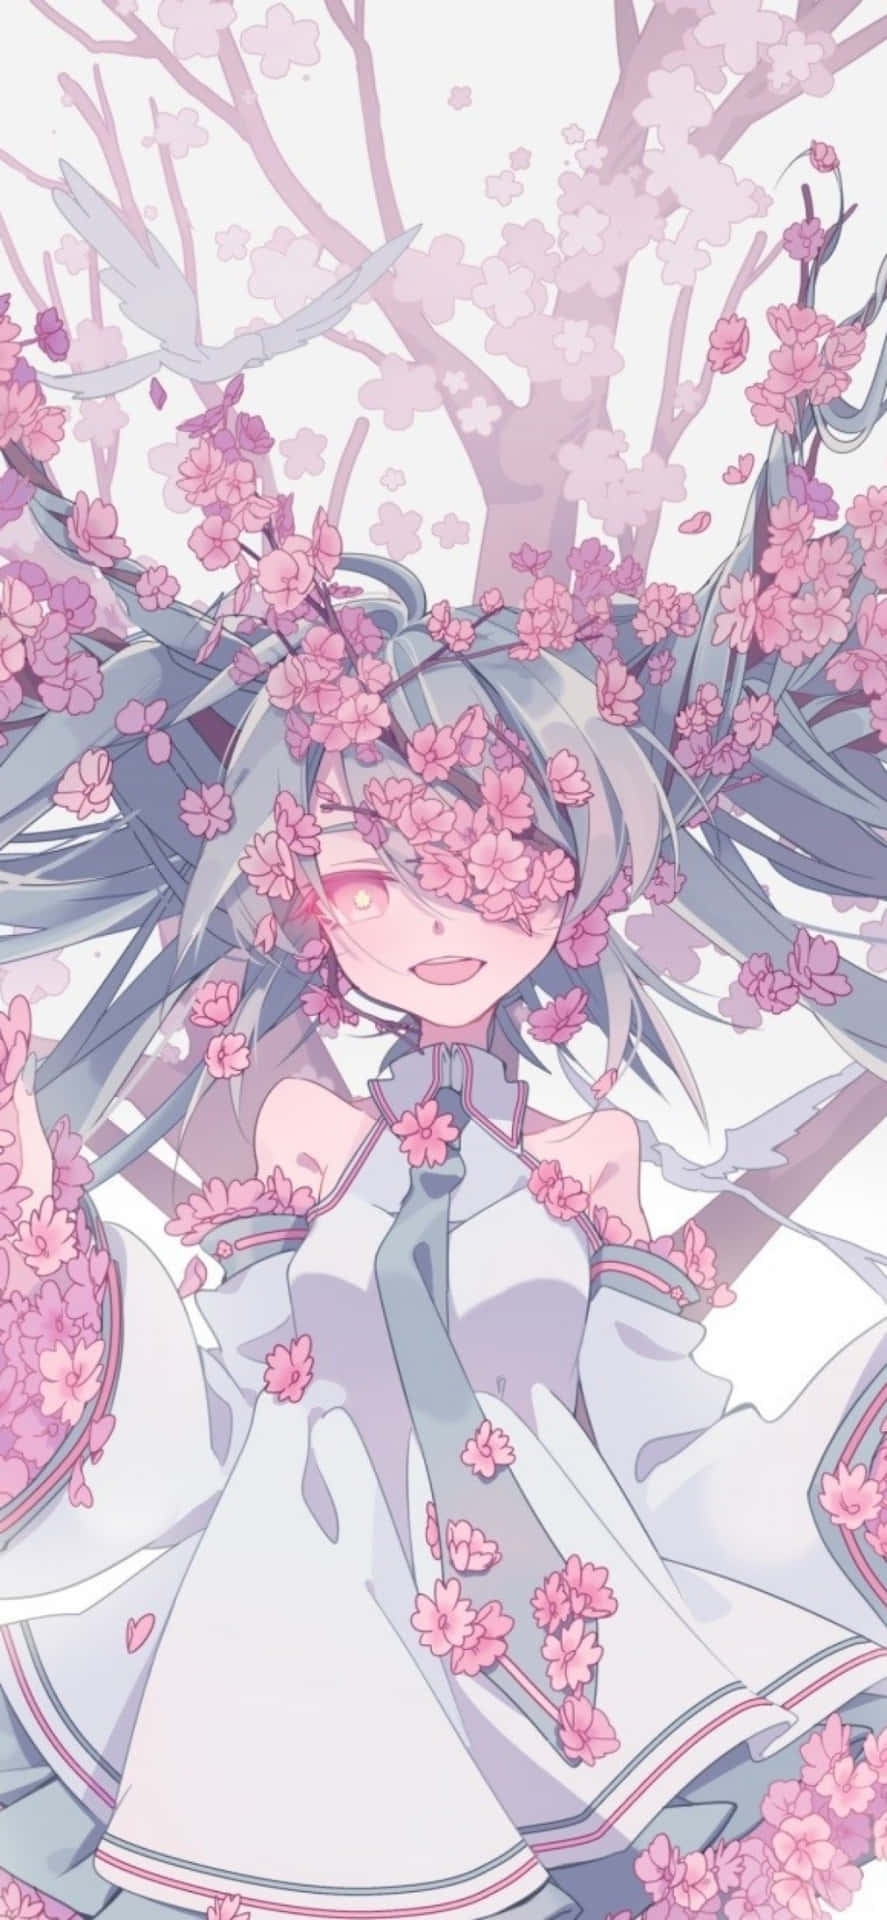 Sakura Miku embracing the cherry blossom season Wallpaper